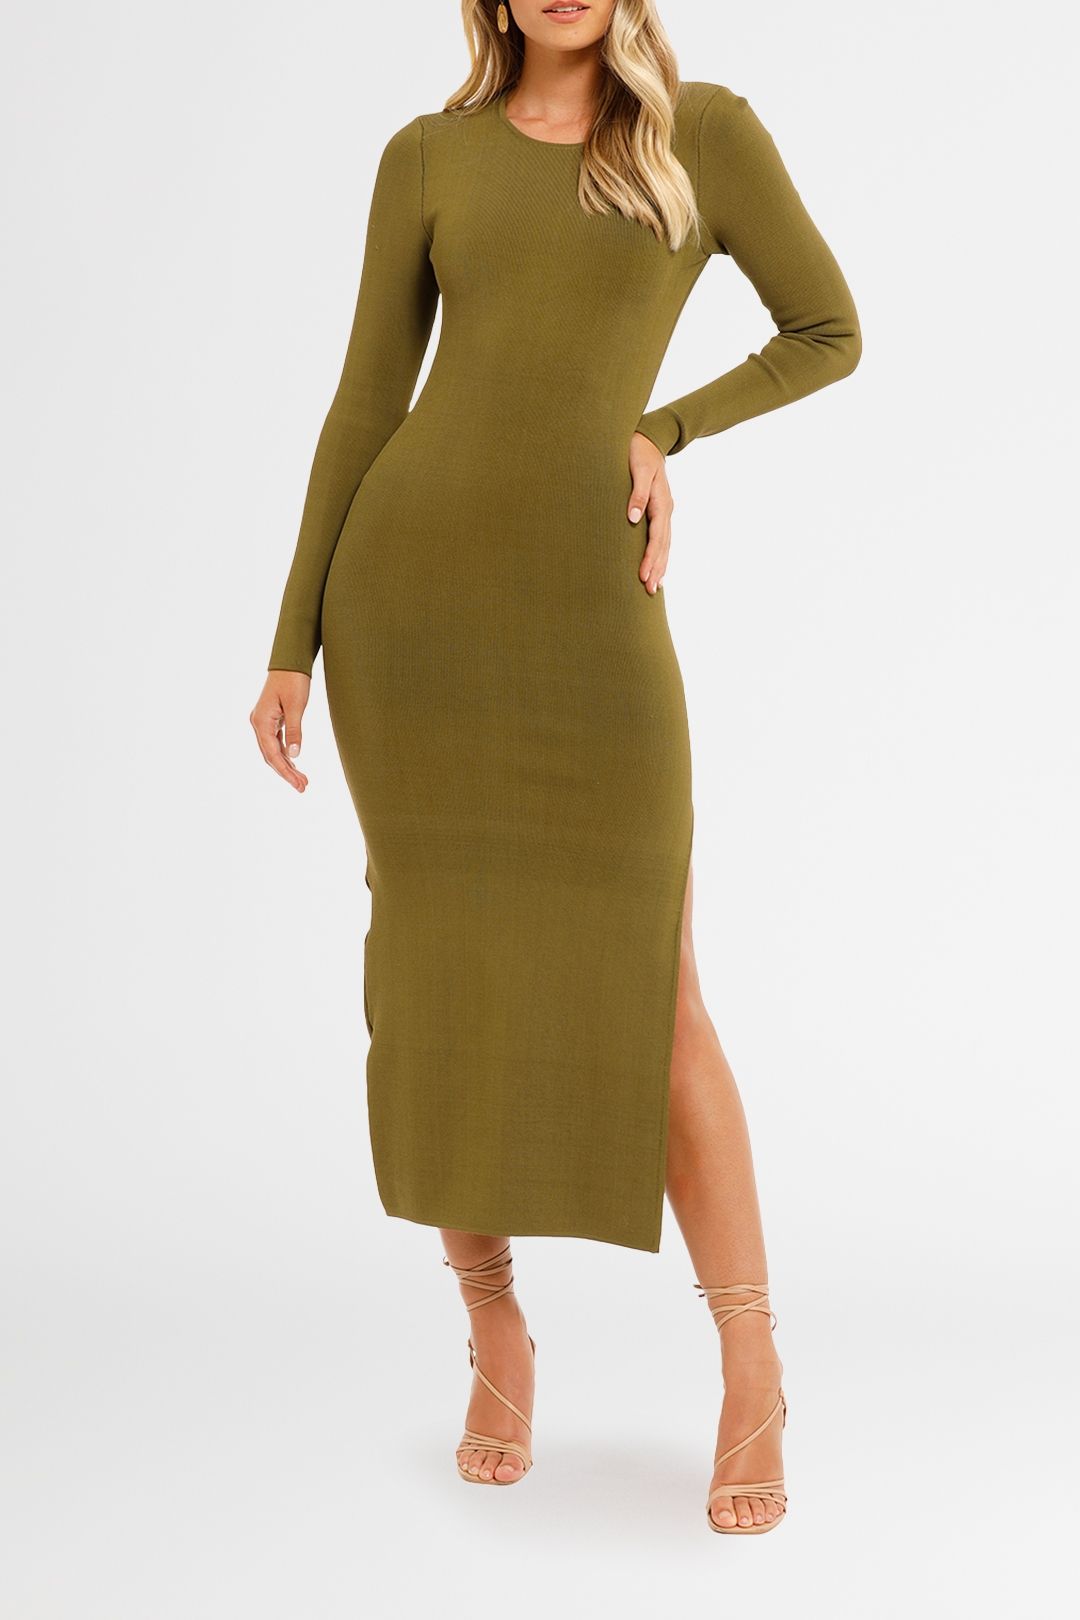 Shona Joy Long Sleeve Backless Midi Dress Olive